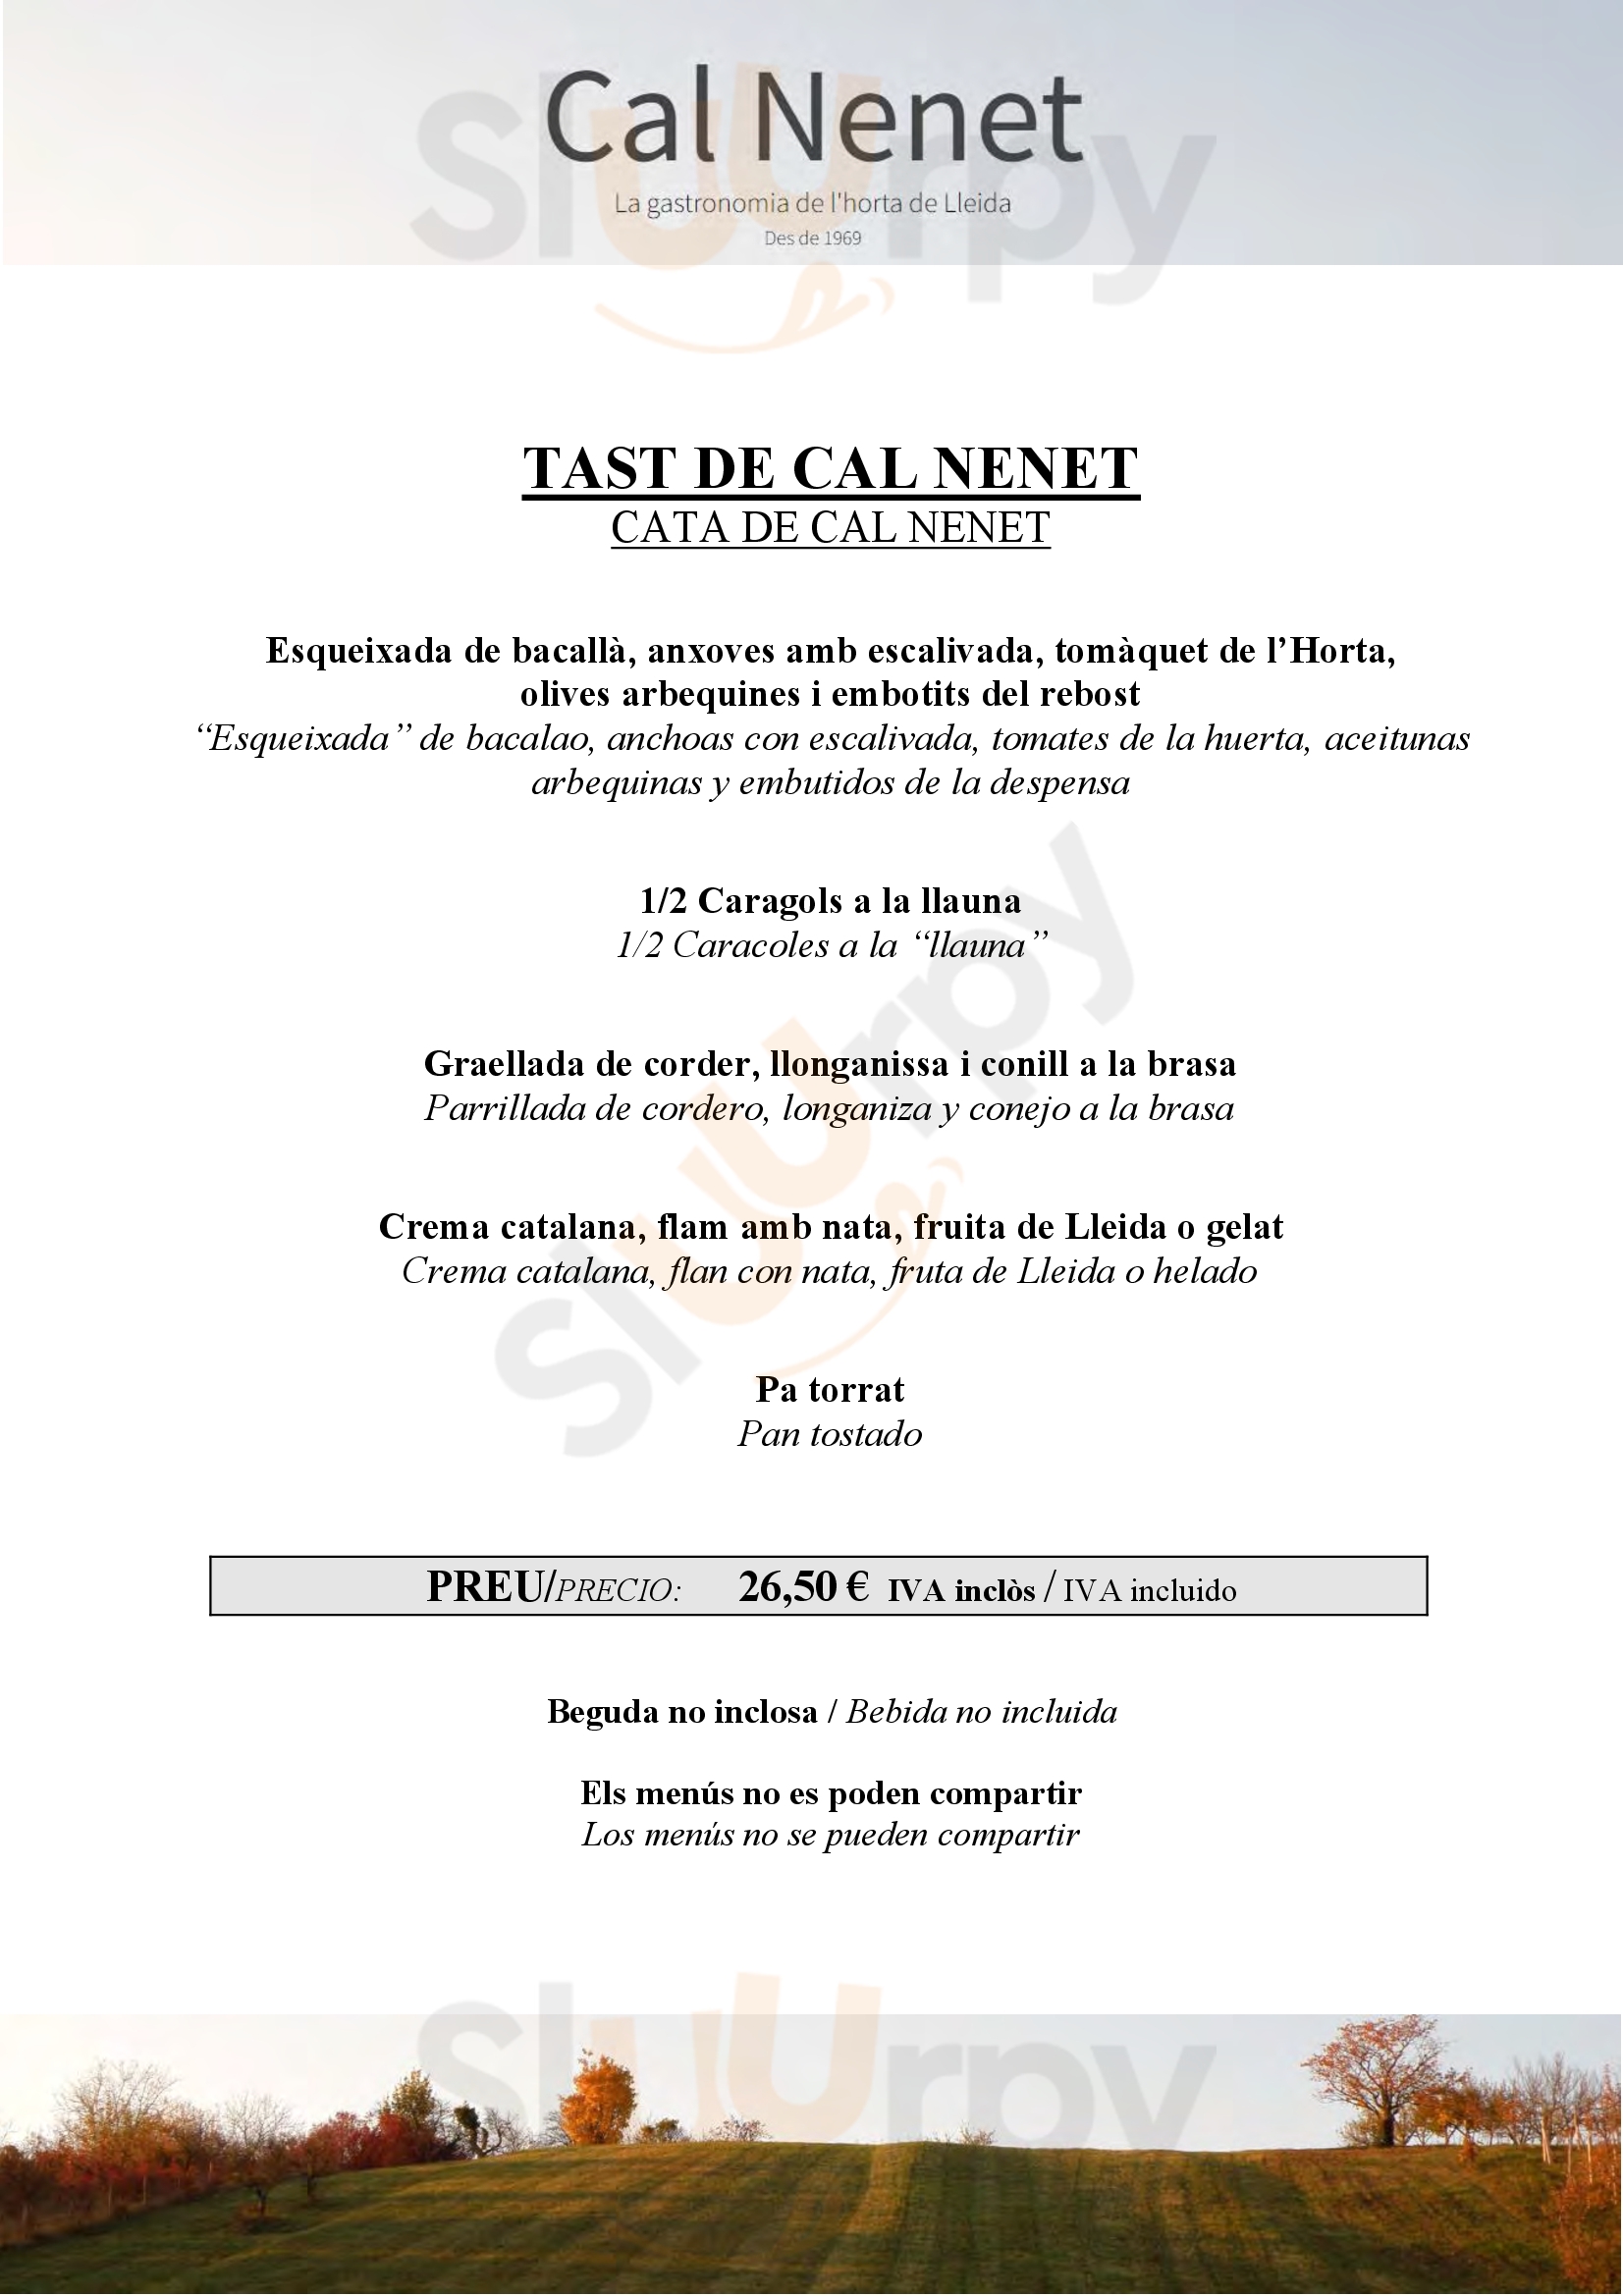 Restaurant Cal Nenet Lleida Menu - 1